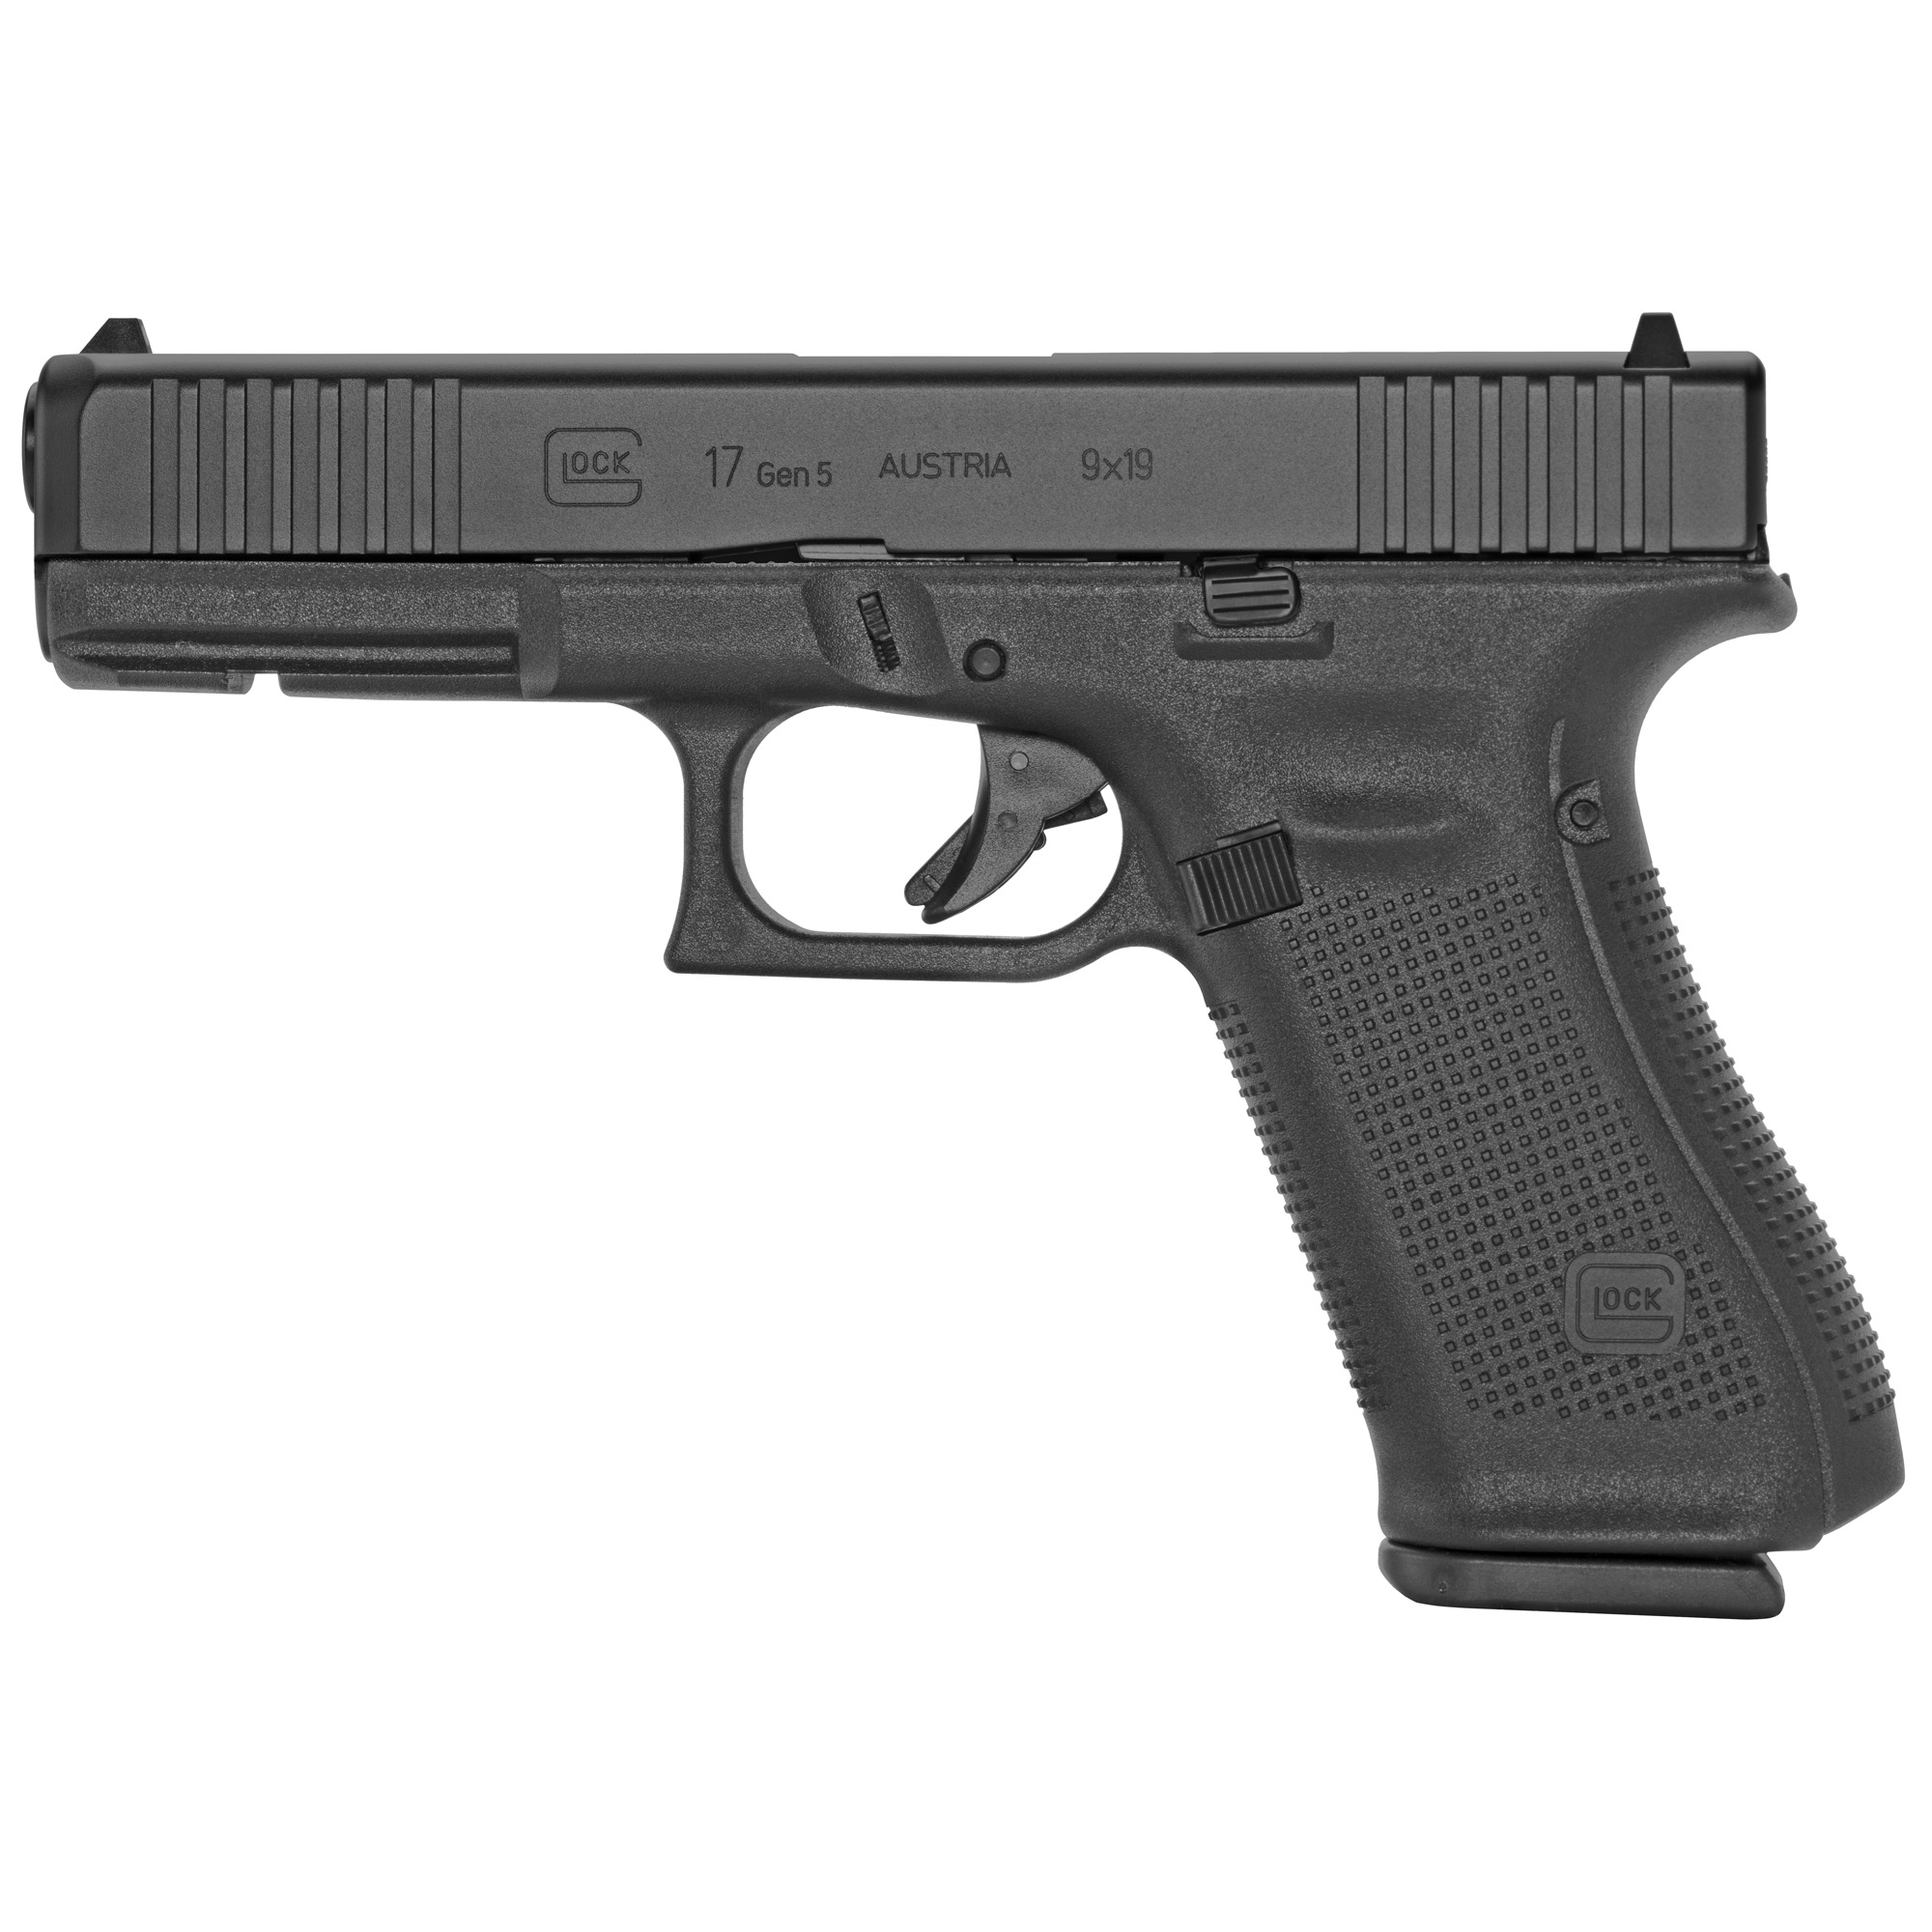 Glock G17 Gen5 9mm 4.49" 17+1 Black nDLC Steel w/Front Serrations Slide Black Rough Texture Interchangeable Backstraps Grip Fixe